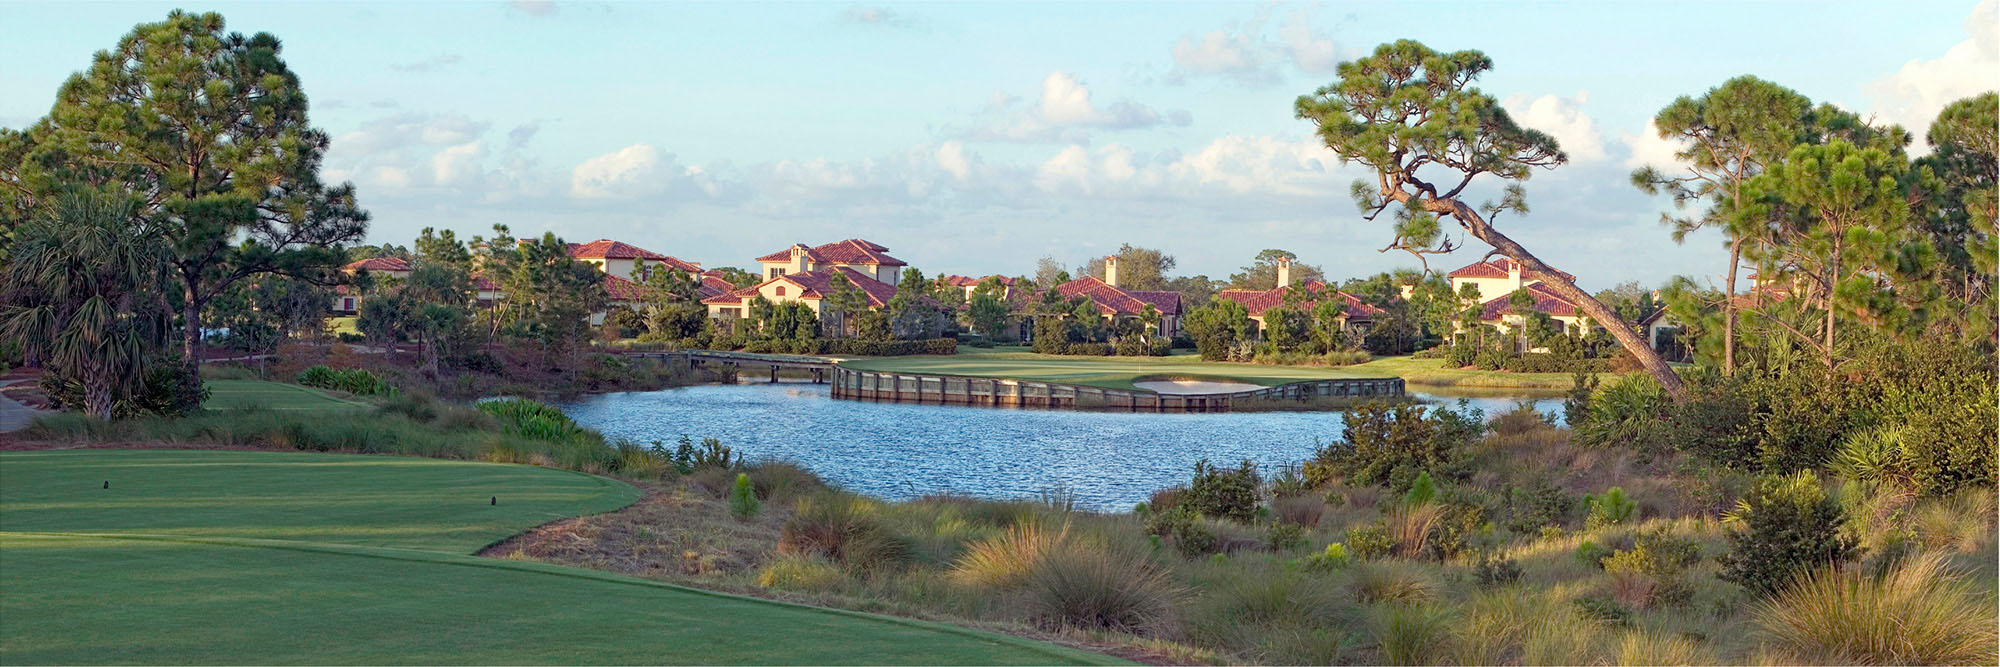 Golf Course Image - Ritz Carlton Jupiter No. 11